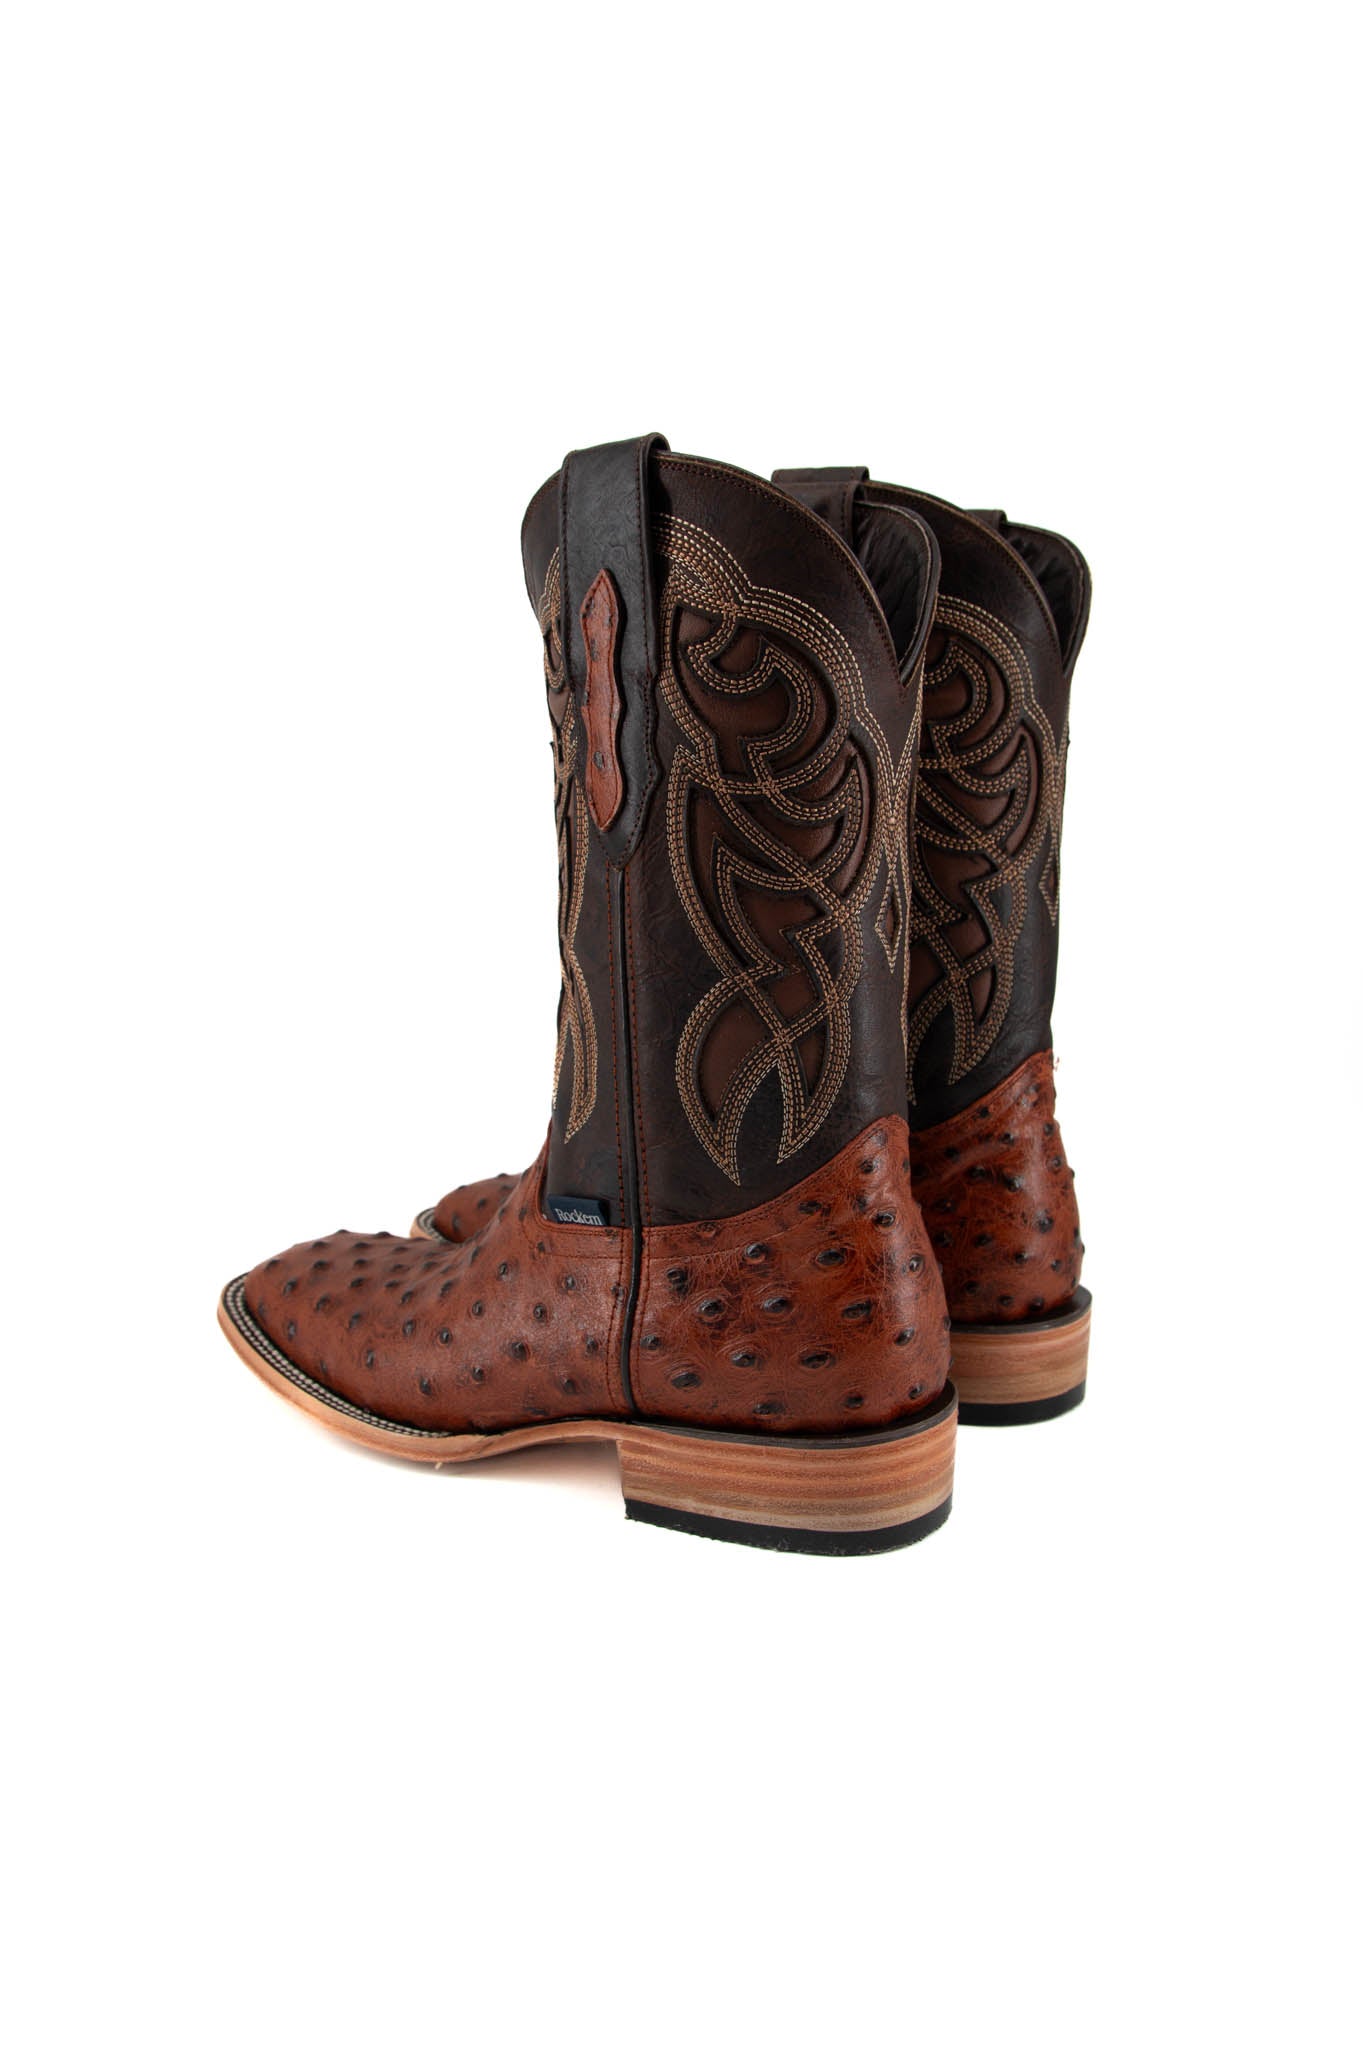 Imit Avestruz Ranch Square Toe Cowboy Boot